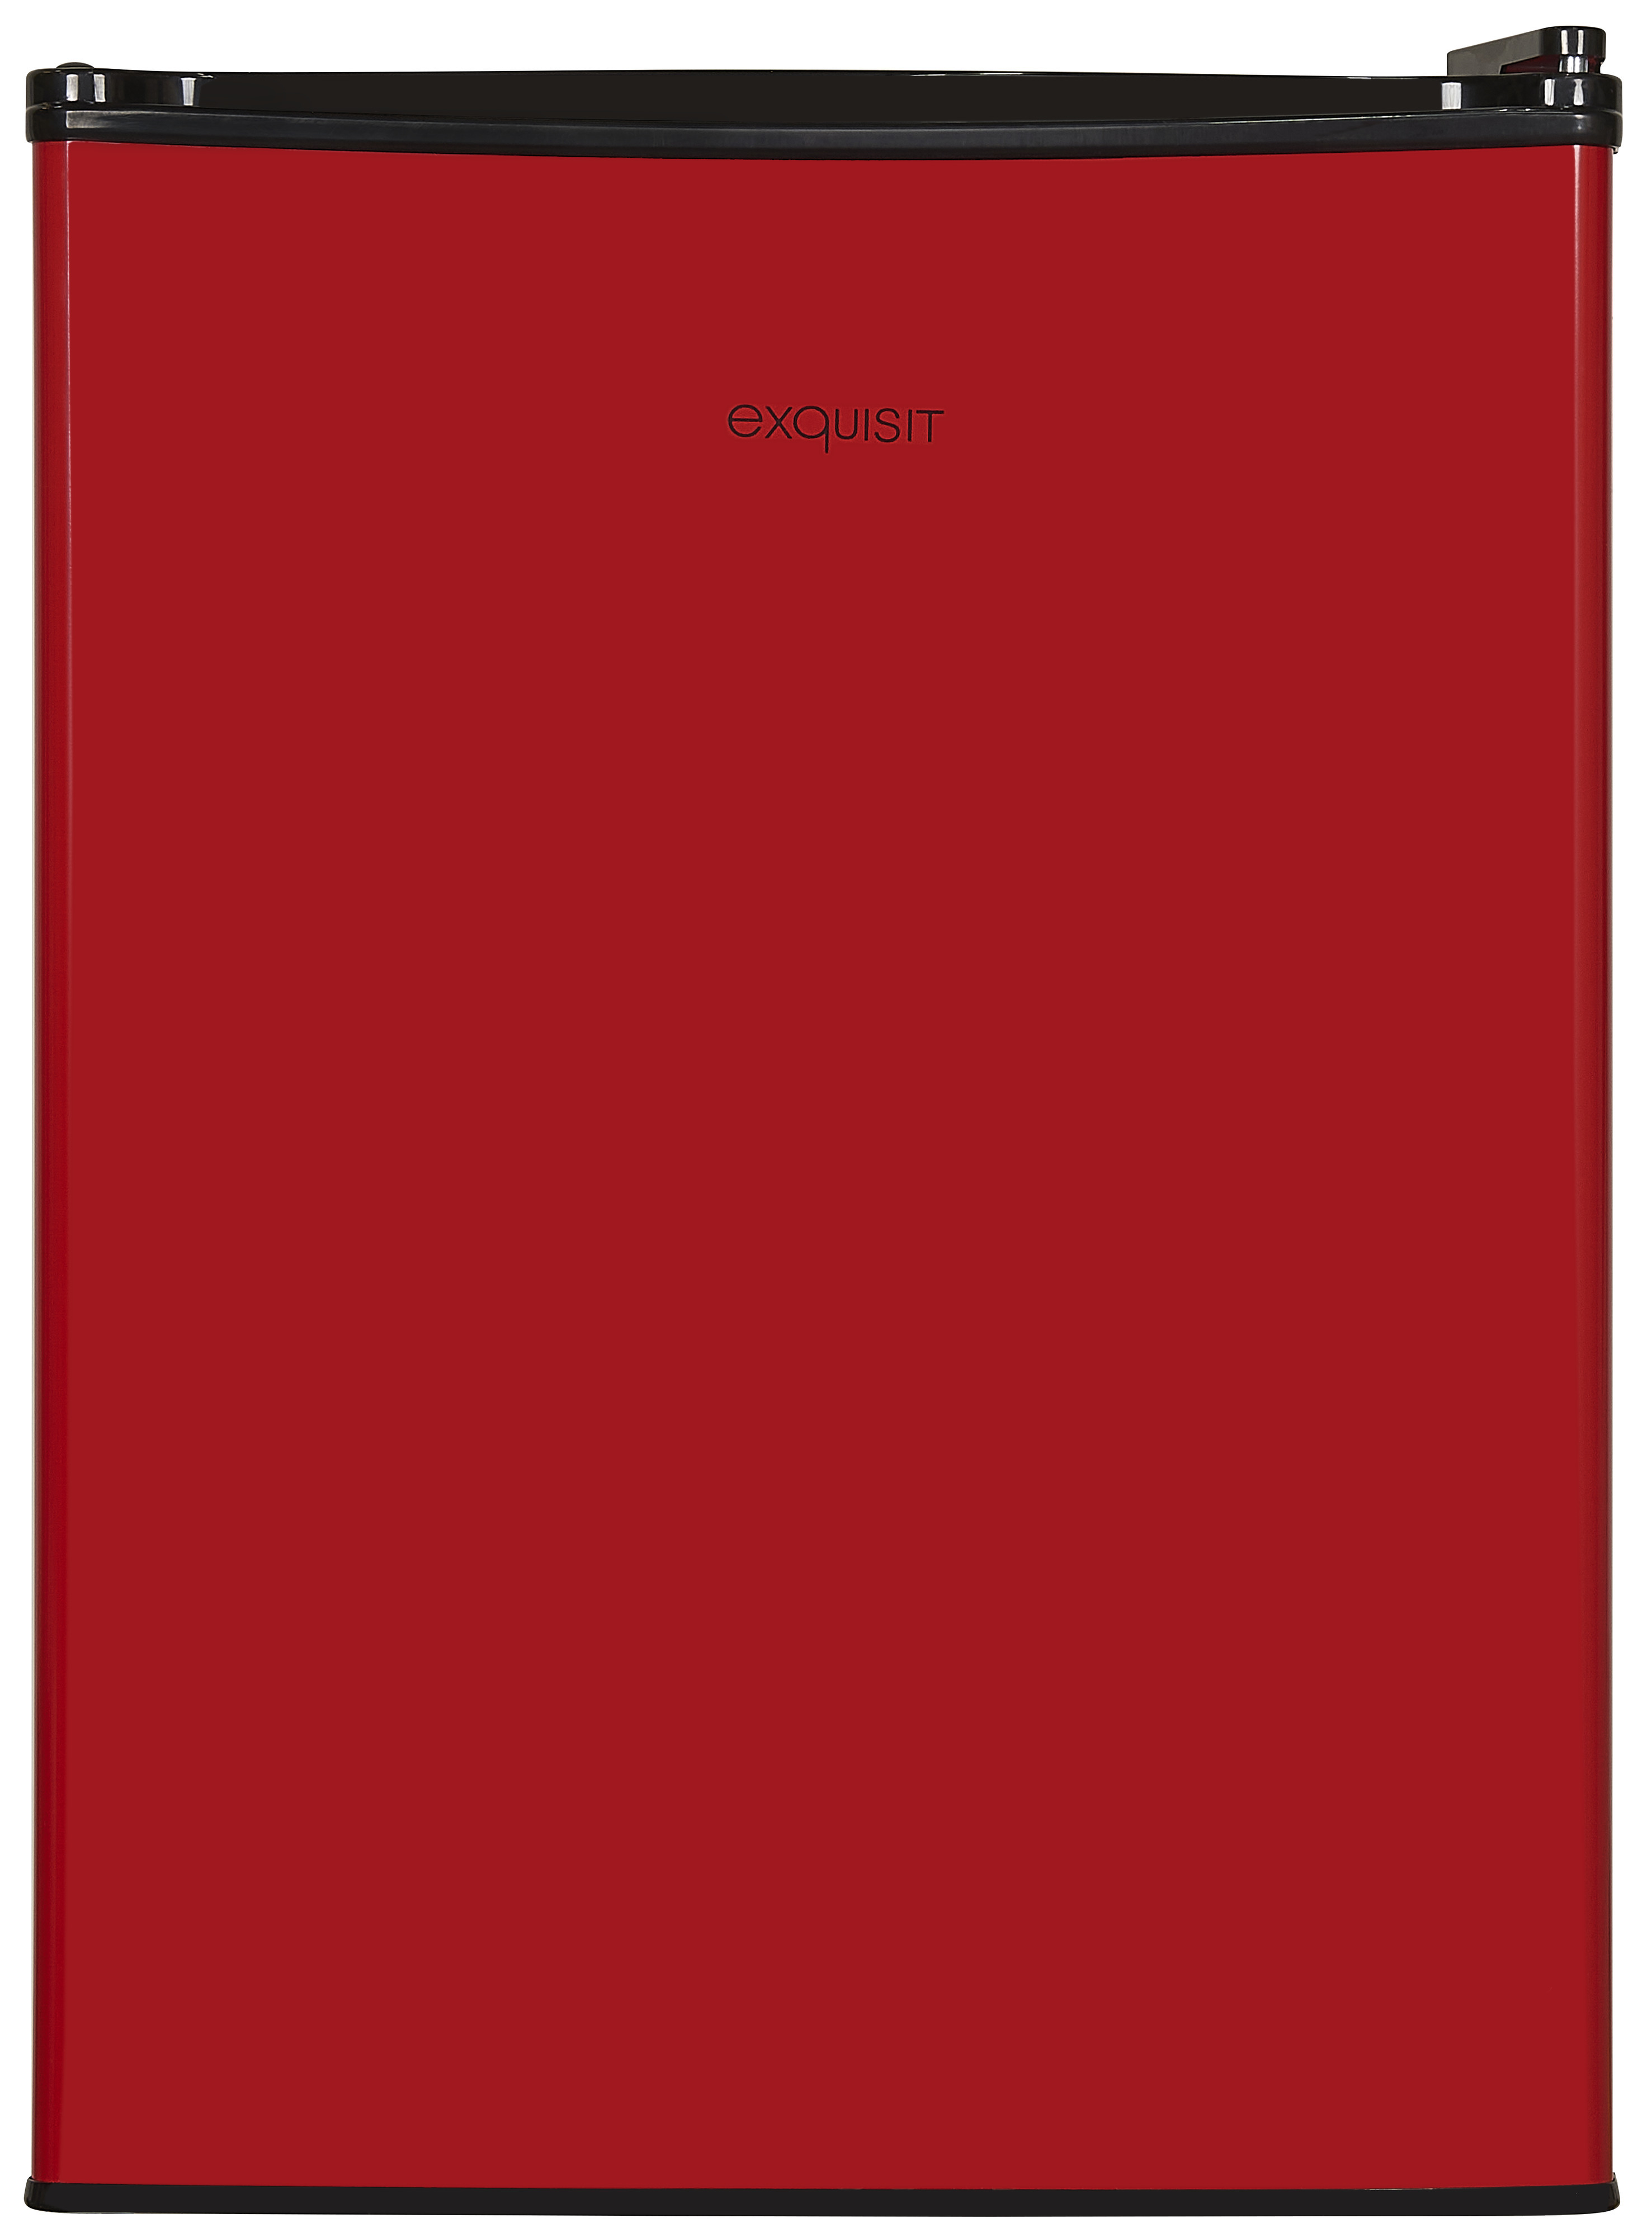 EXQUISIT KB60-V-090E rot hoch, Rot) Kühlschrank (E, mm 620